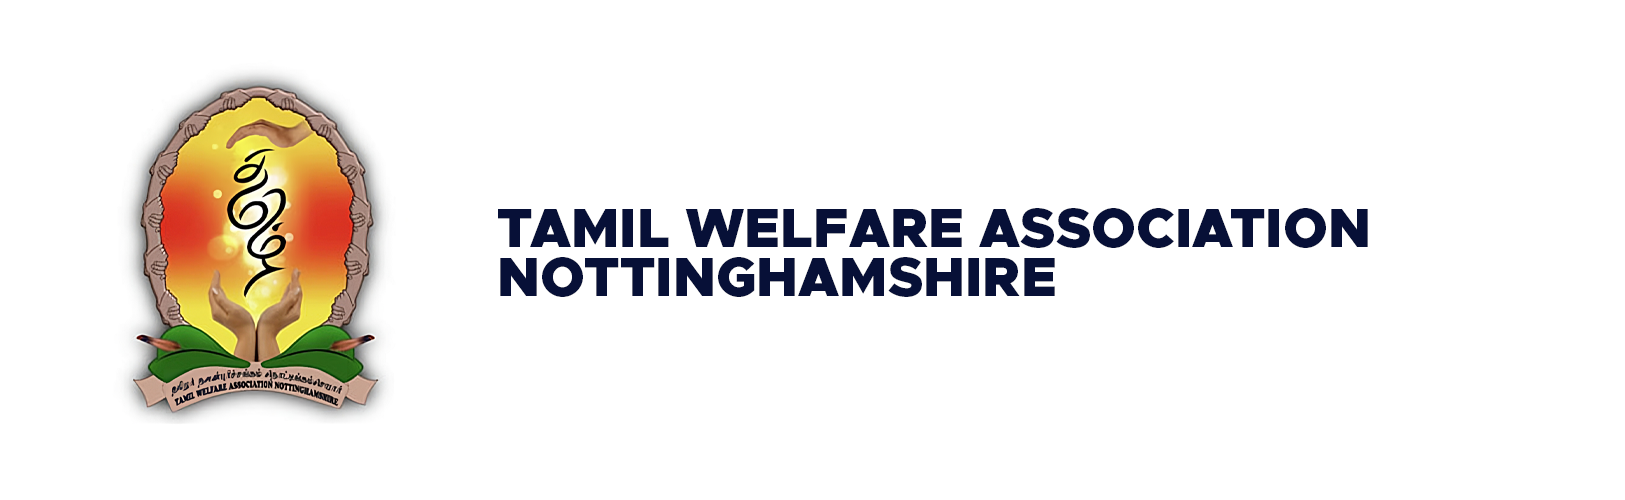 Tamil Welfare Association Nottinghamshire